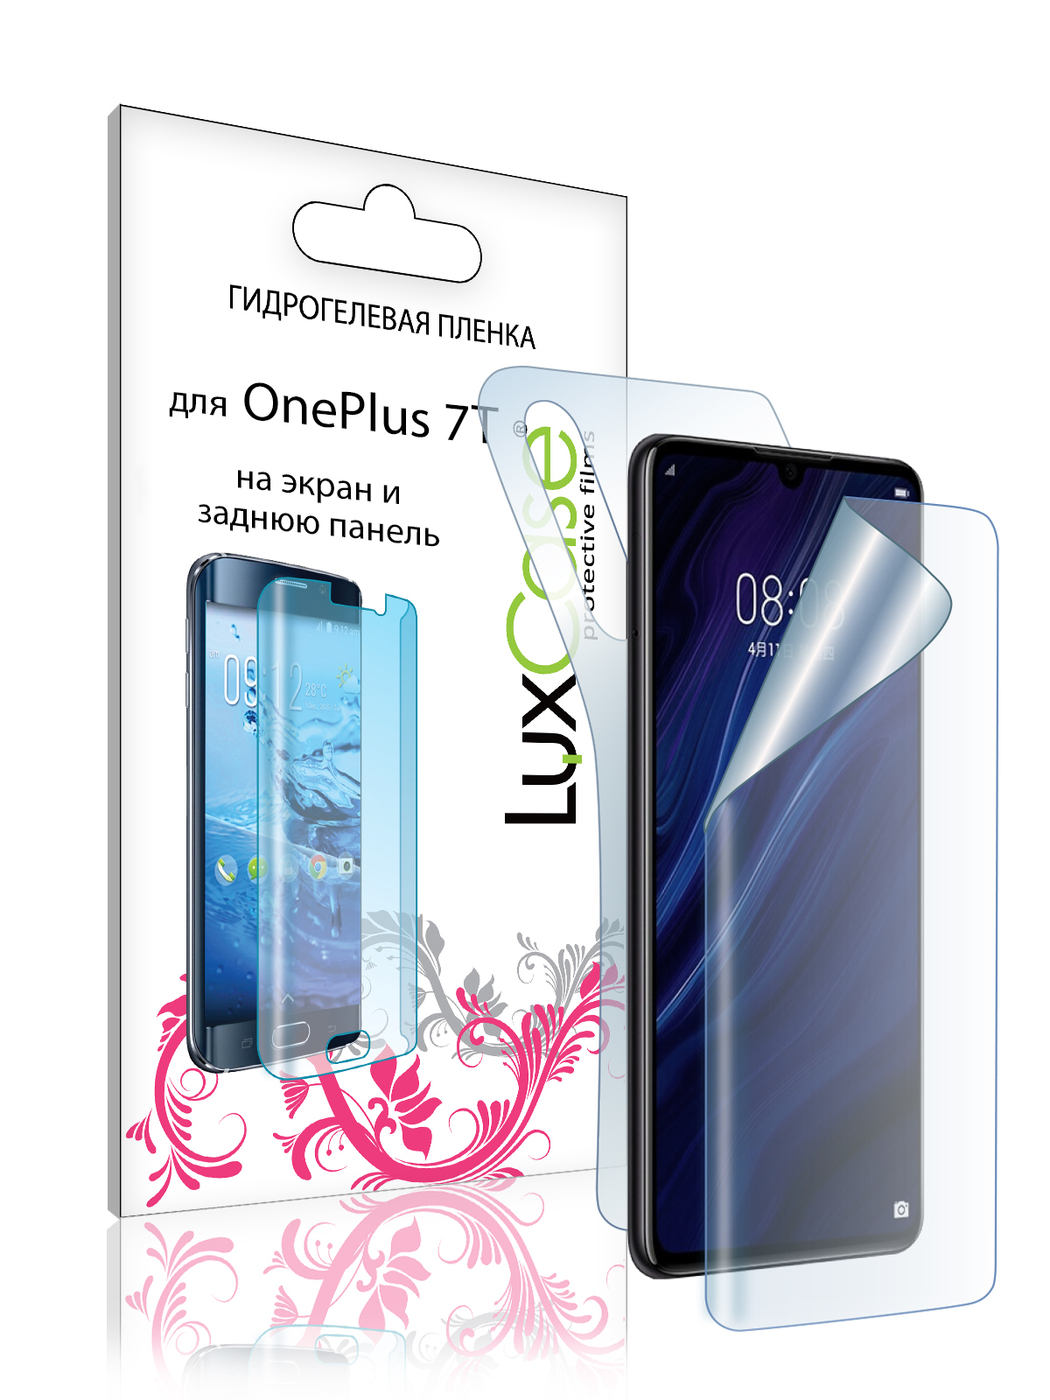 Защитная пленка LuxCase для OnePlus 7T Front and Back 0.14mm Transparent 86158 защитная пленка luxcase для oneplus 6 back 0 14mm transparent 86163